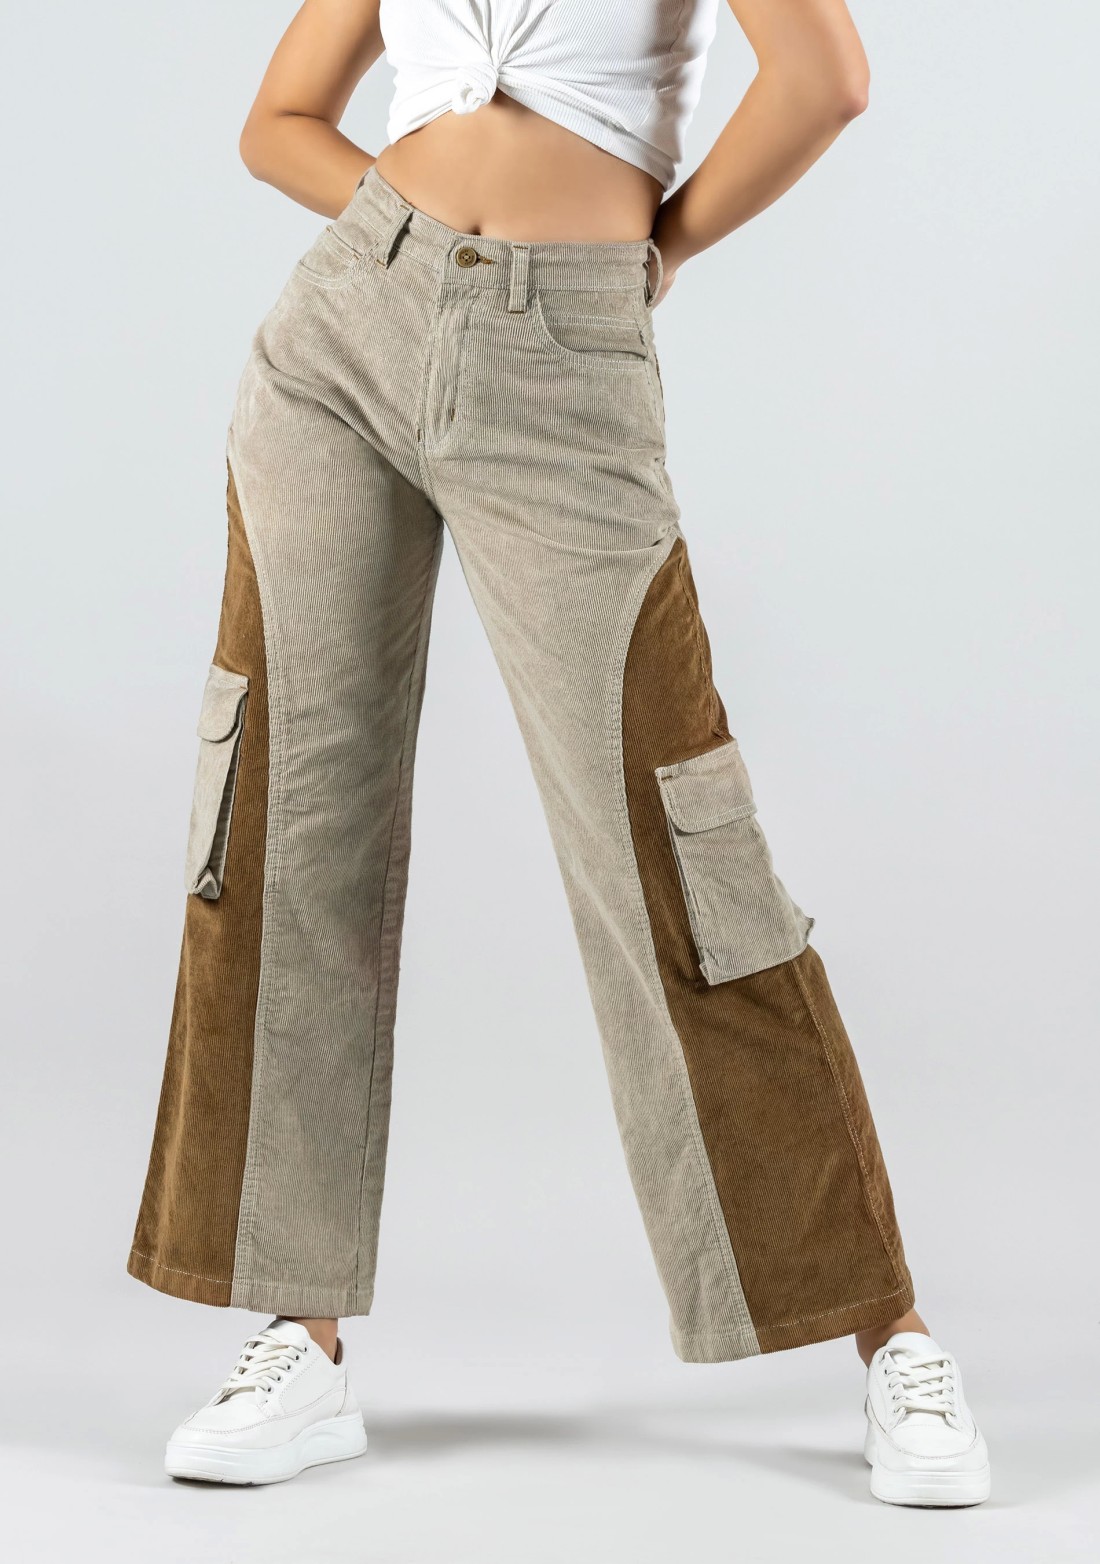 Buy Dark Brown Female Trouser Online @ Best Prices in India | UNIFORM BUCKET